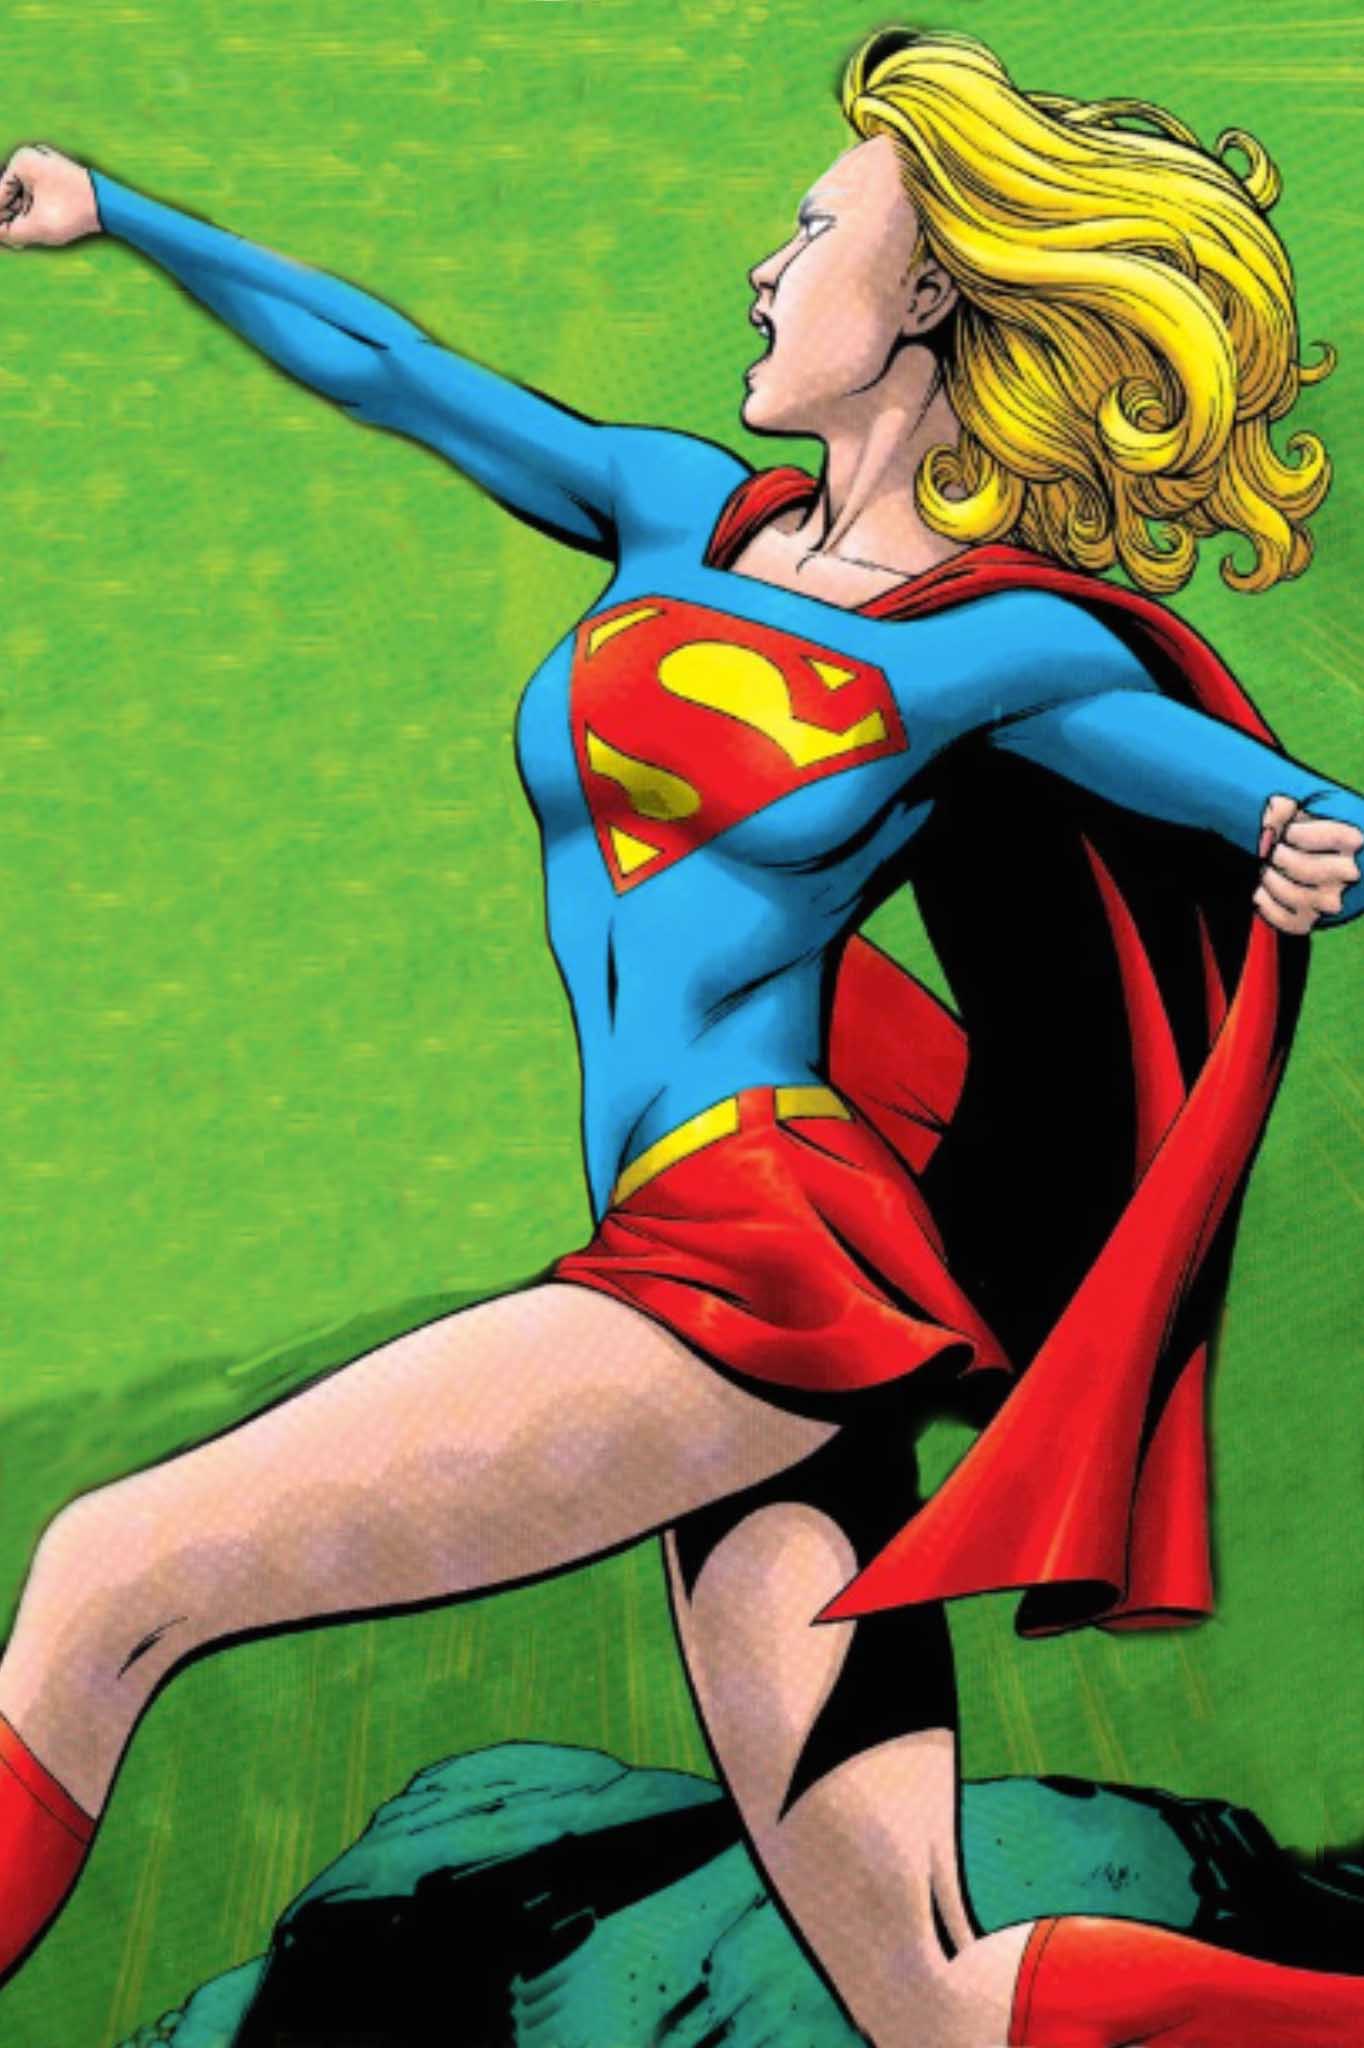 Supergirl.jpg